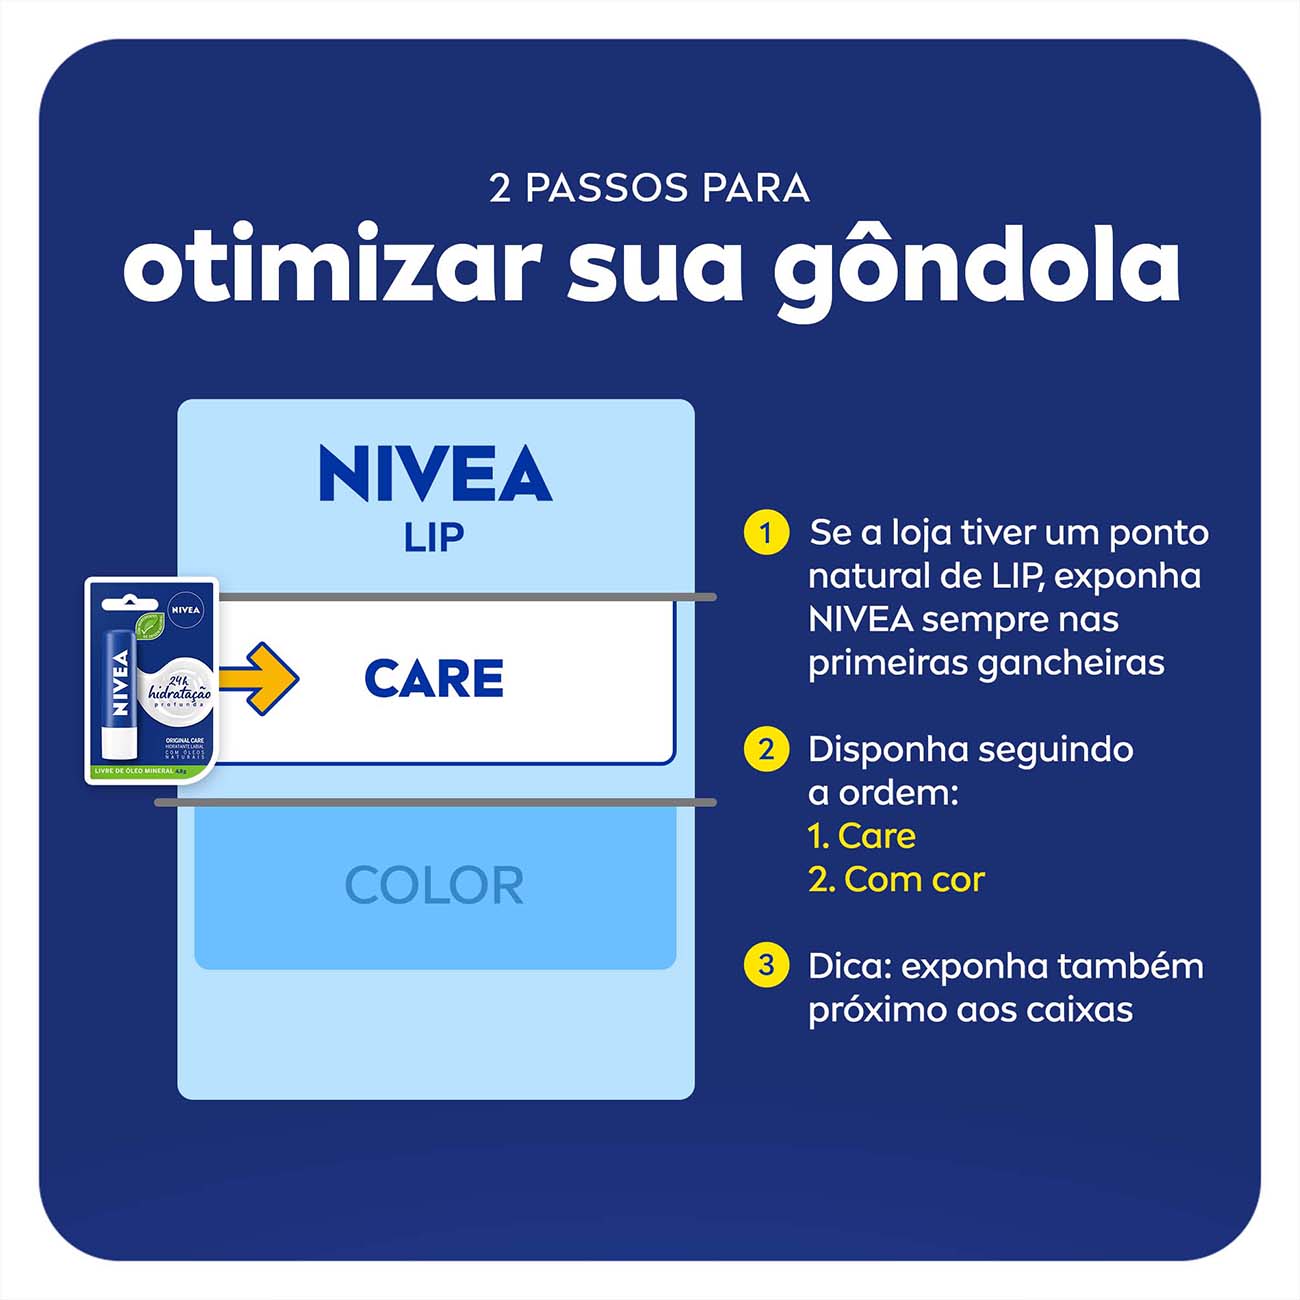 Hidratante Labial NIVEA Original Care Hidratao Profunda 4,8 g